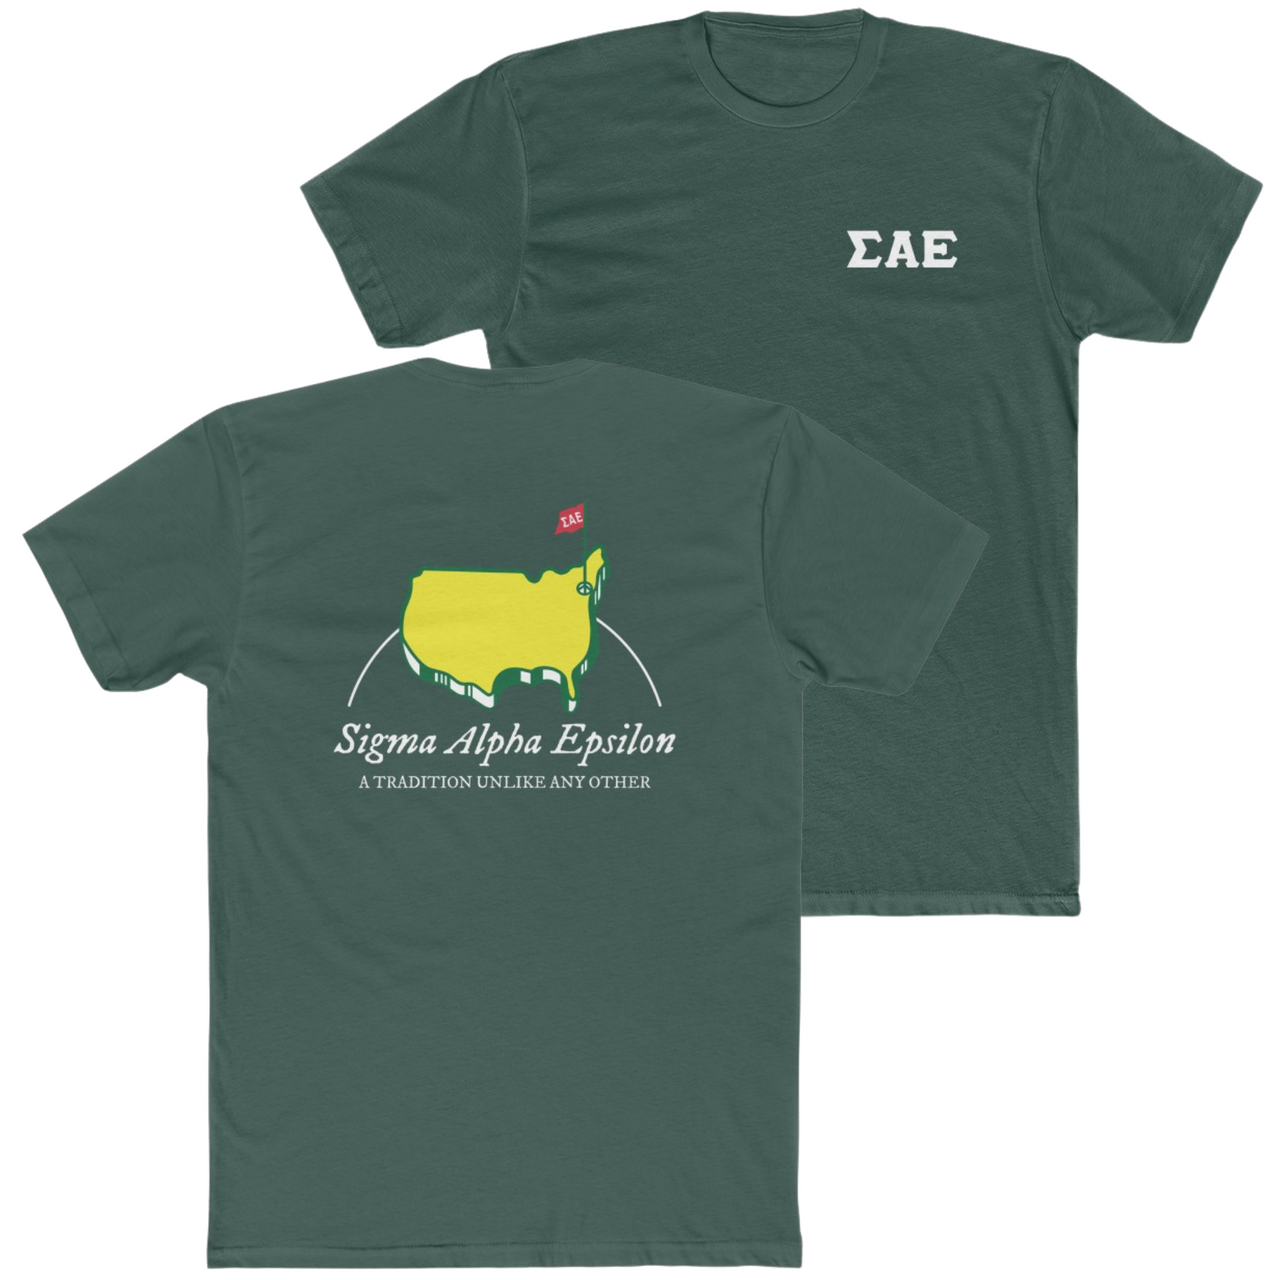 Sigma Alpha Epsilon Graphic T-Shirt | The Masters | Sigma Alpha Epsilon Clothing and Merchandise